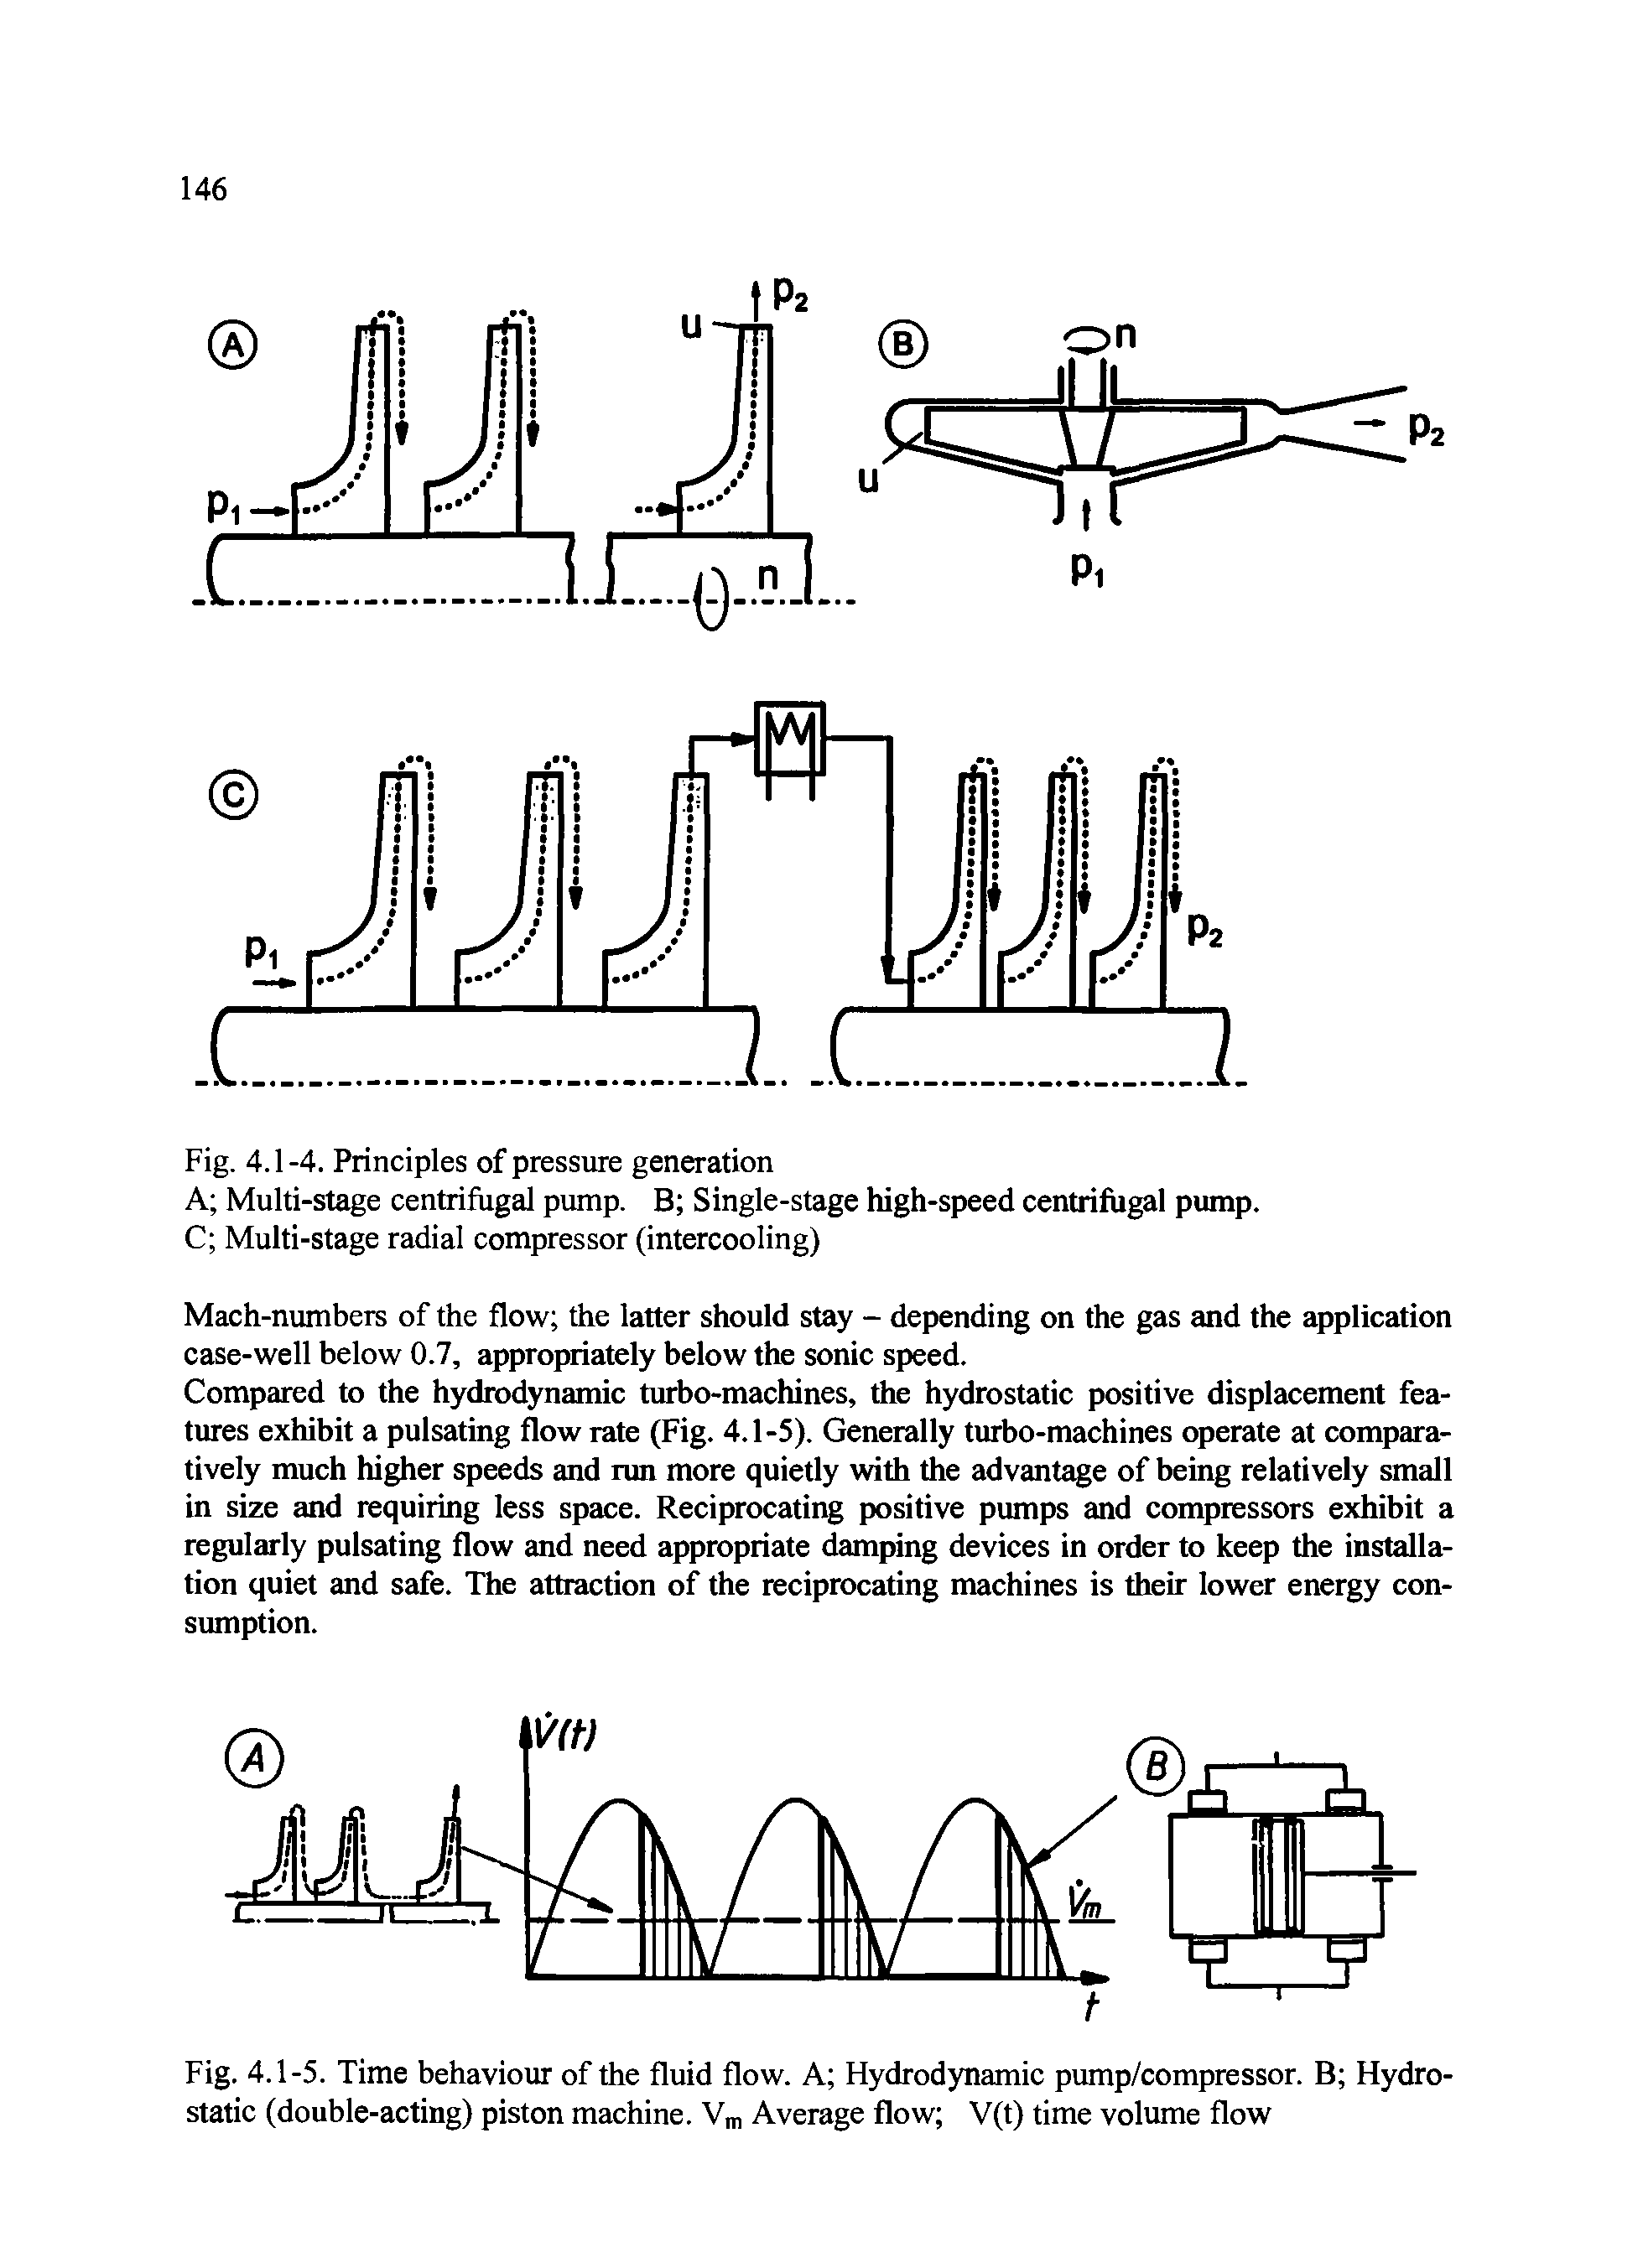 Fig. 4.1-5. Time behaviour of the fluid flow. A Hydrodynamic pump/compressor. B Hydrostatic (double-acting) piston machine. Vm Average flow V(t) time volume flow...